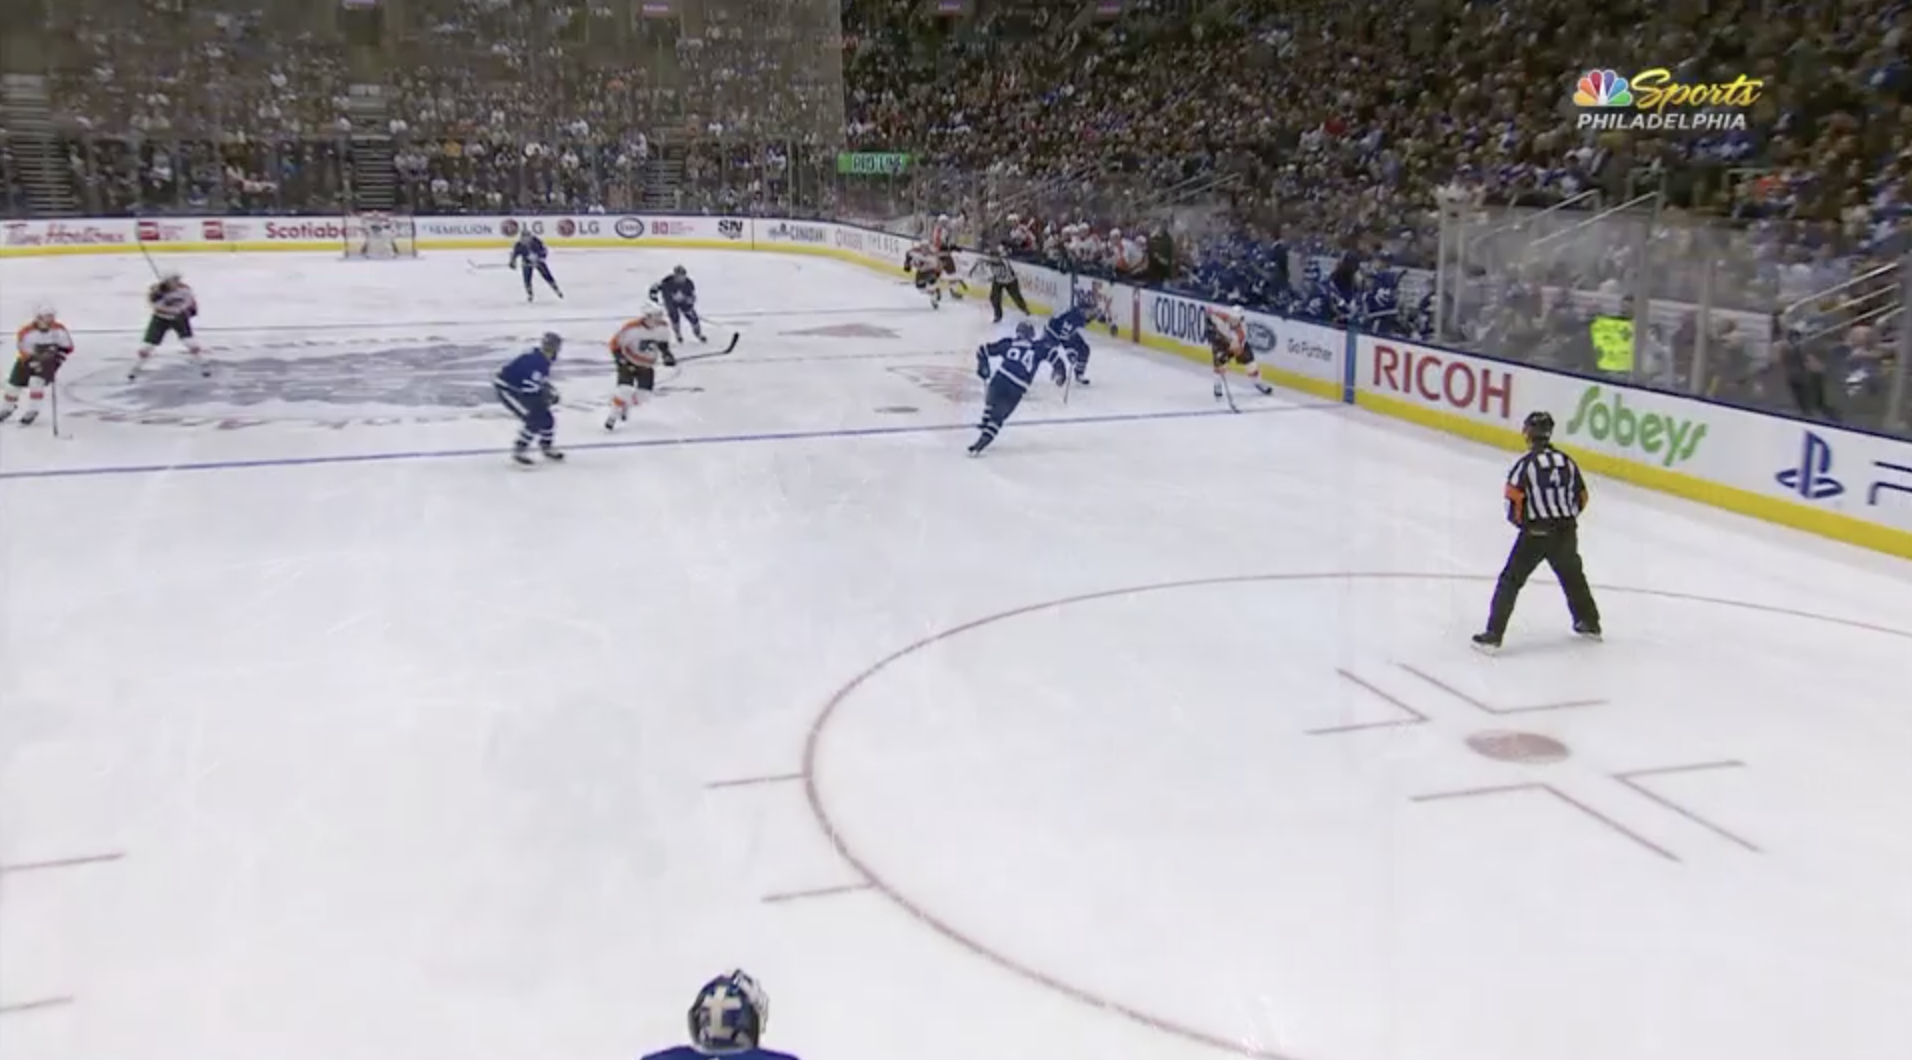 Toronto Maple Leafs vs. Philadelphia Flyers, bad coverage 2